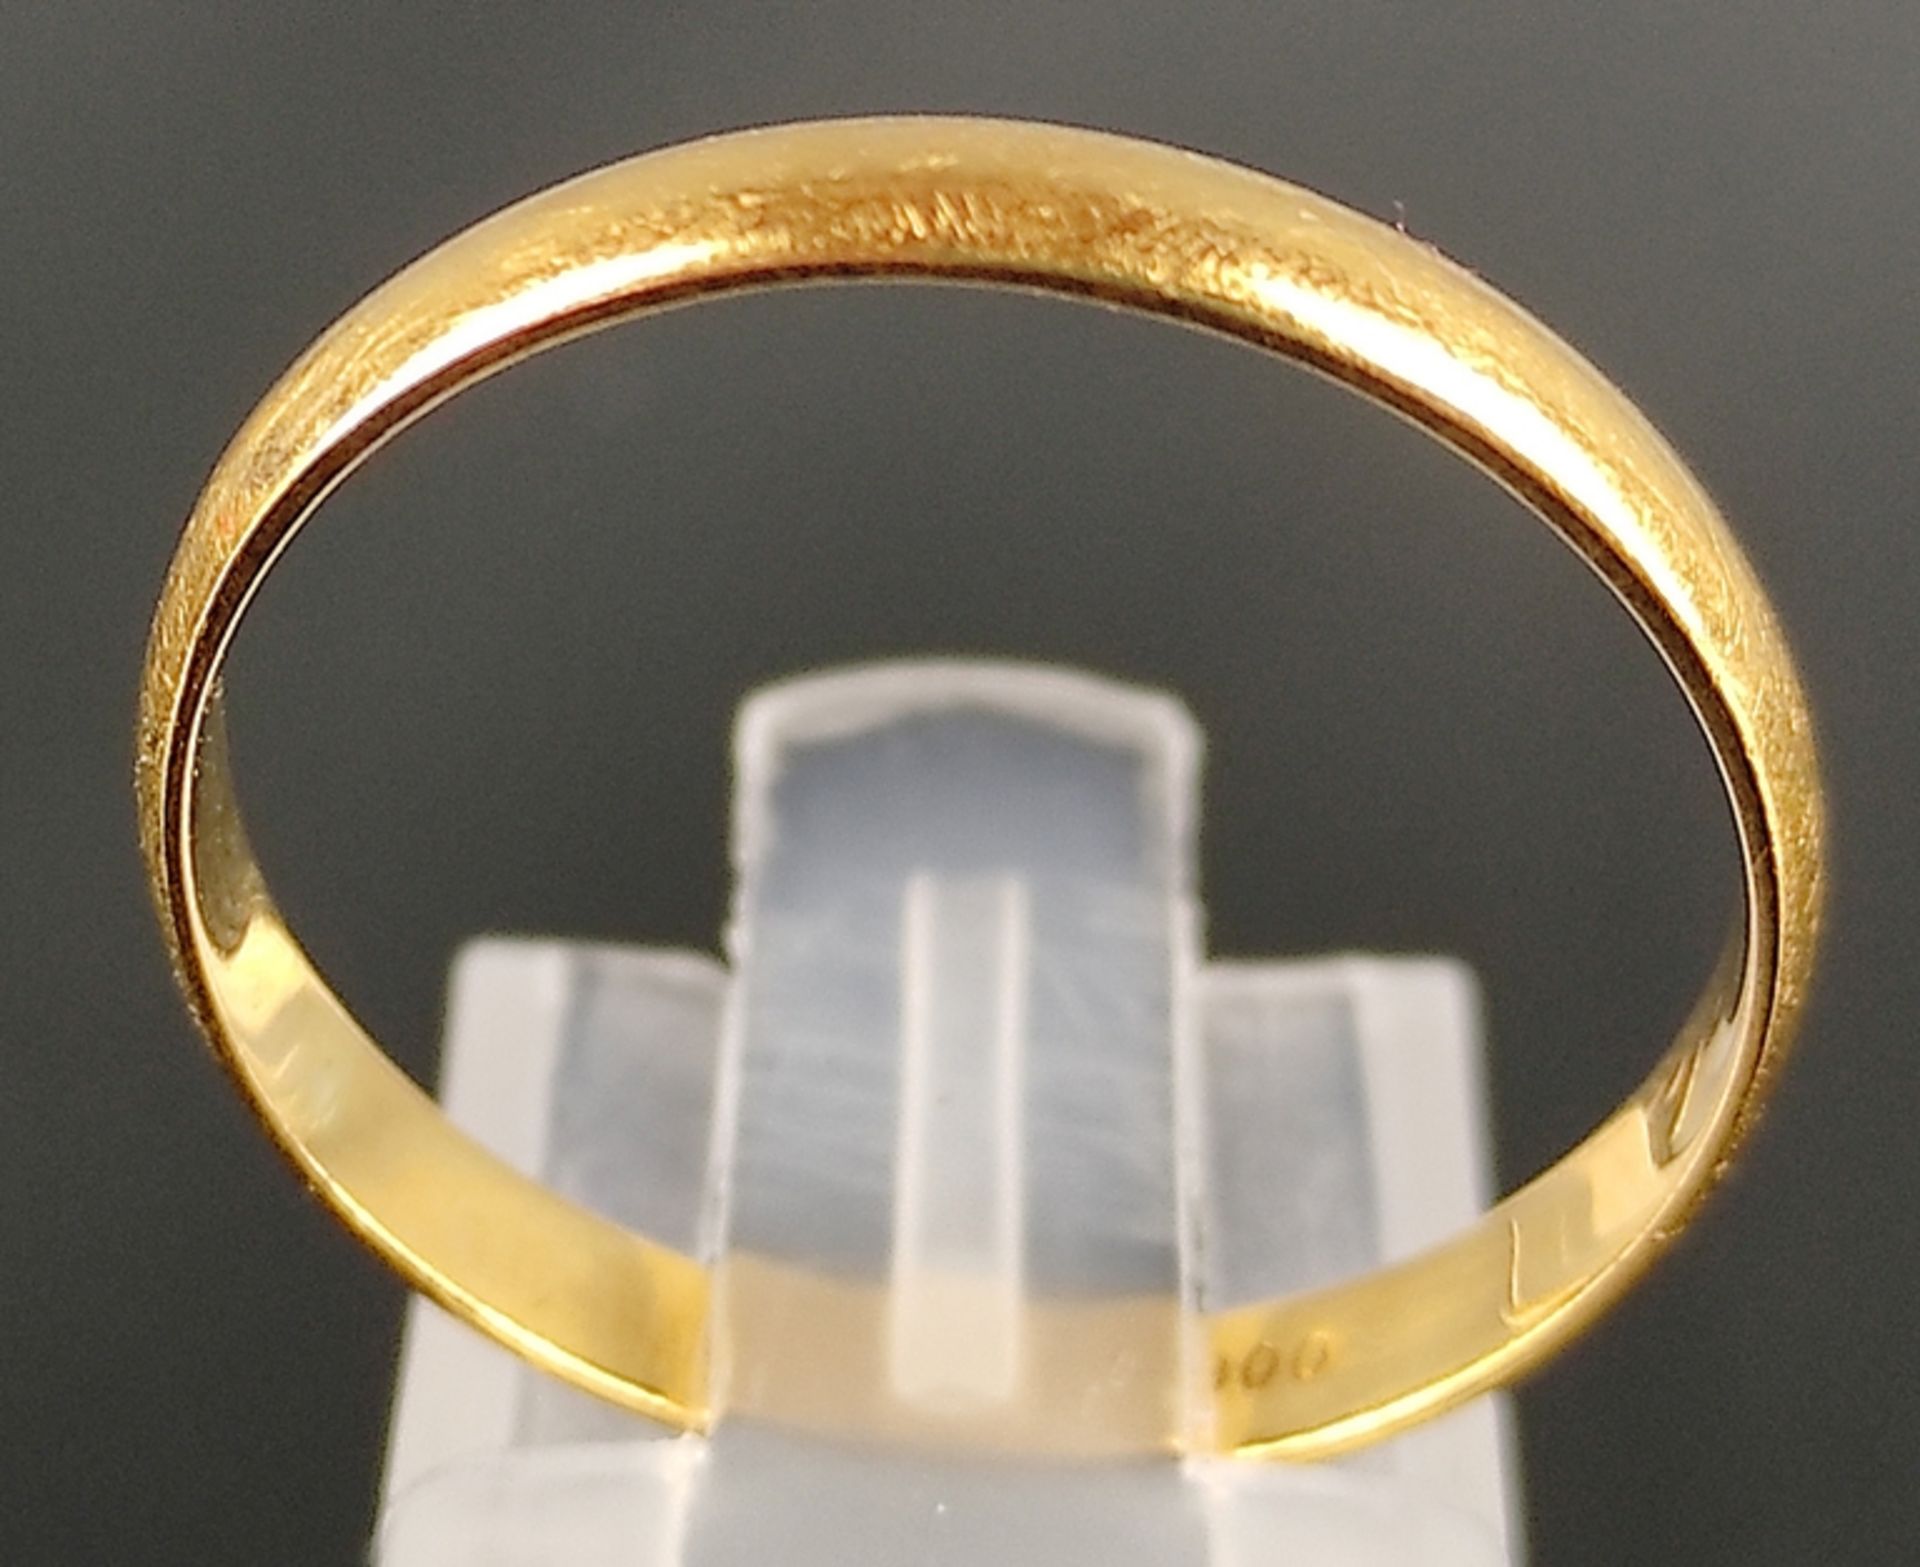 Ehering, 900/21,6K Gelbgold, 2,7g, Größe 63Wedding ring, 900/21.6K yellow gold, 2.7g, size 63 - Image 2 of 4